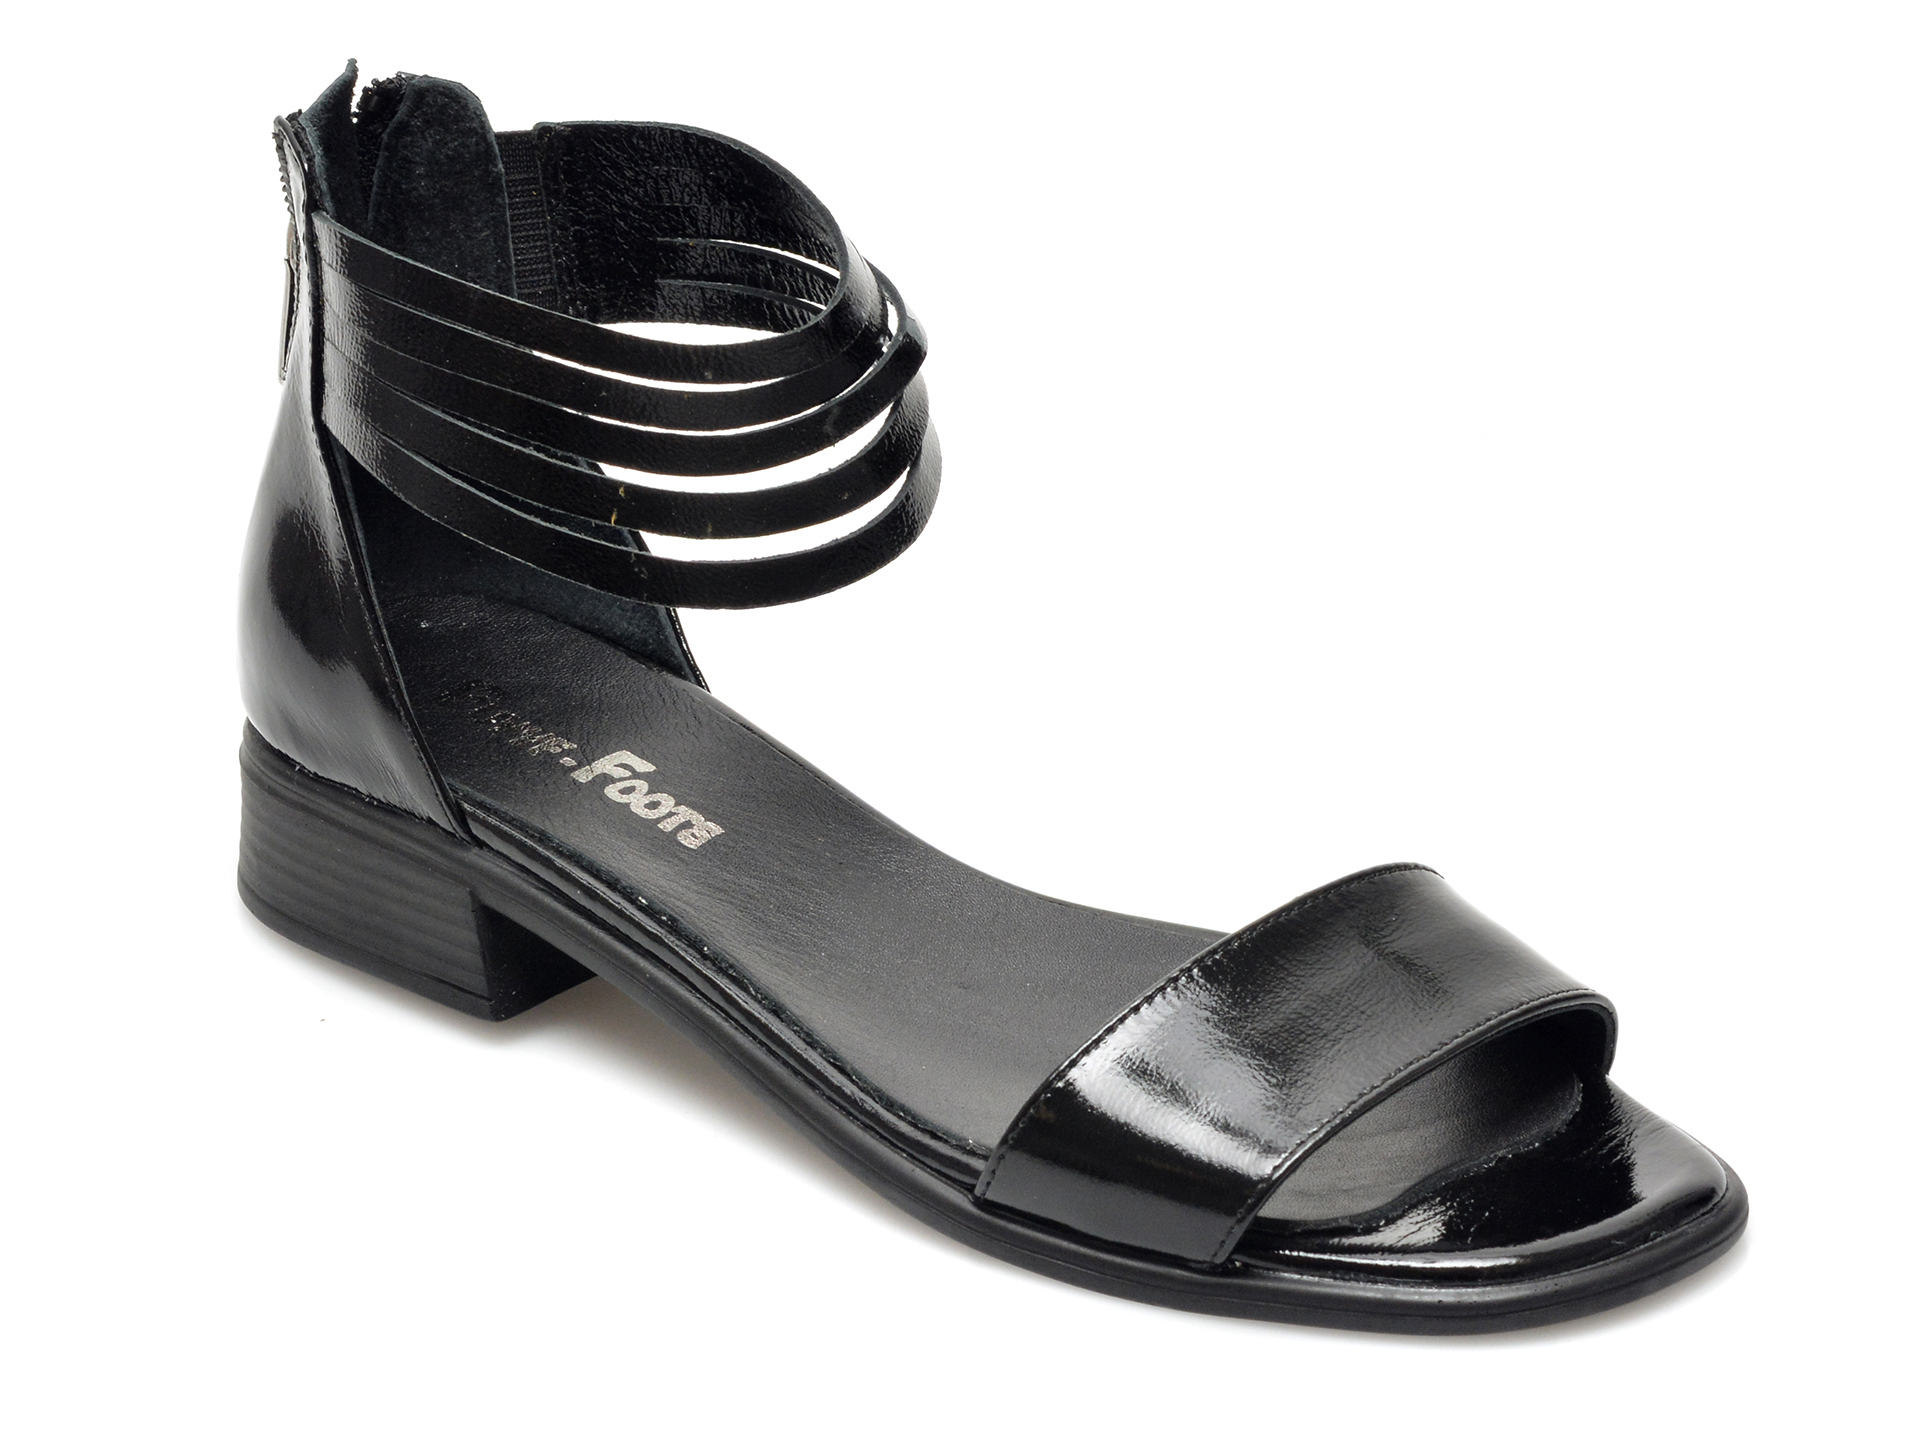 Sandale PUYYF FOOTS negre, 18206, din piele naturala lacuita otter.ro